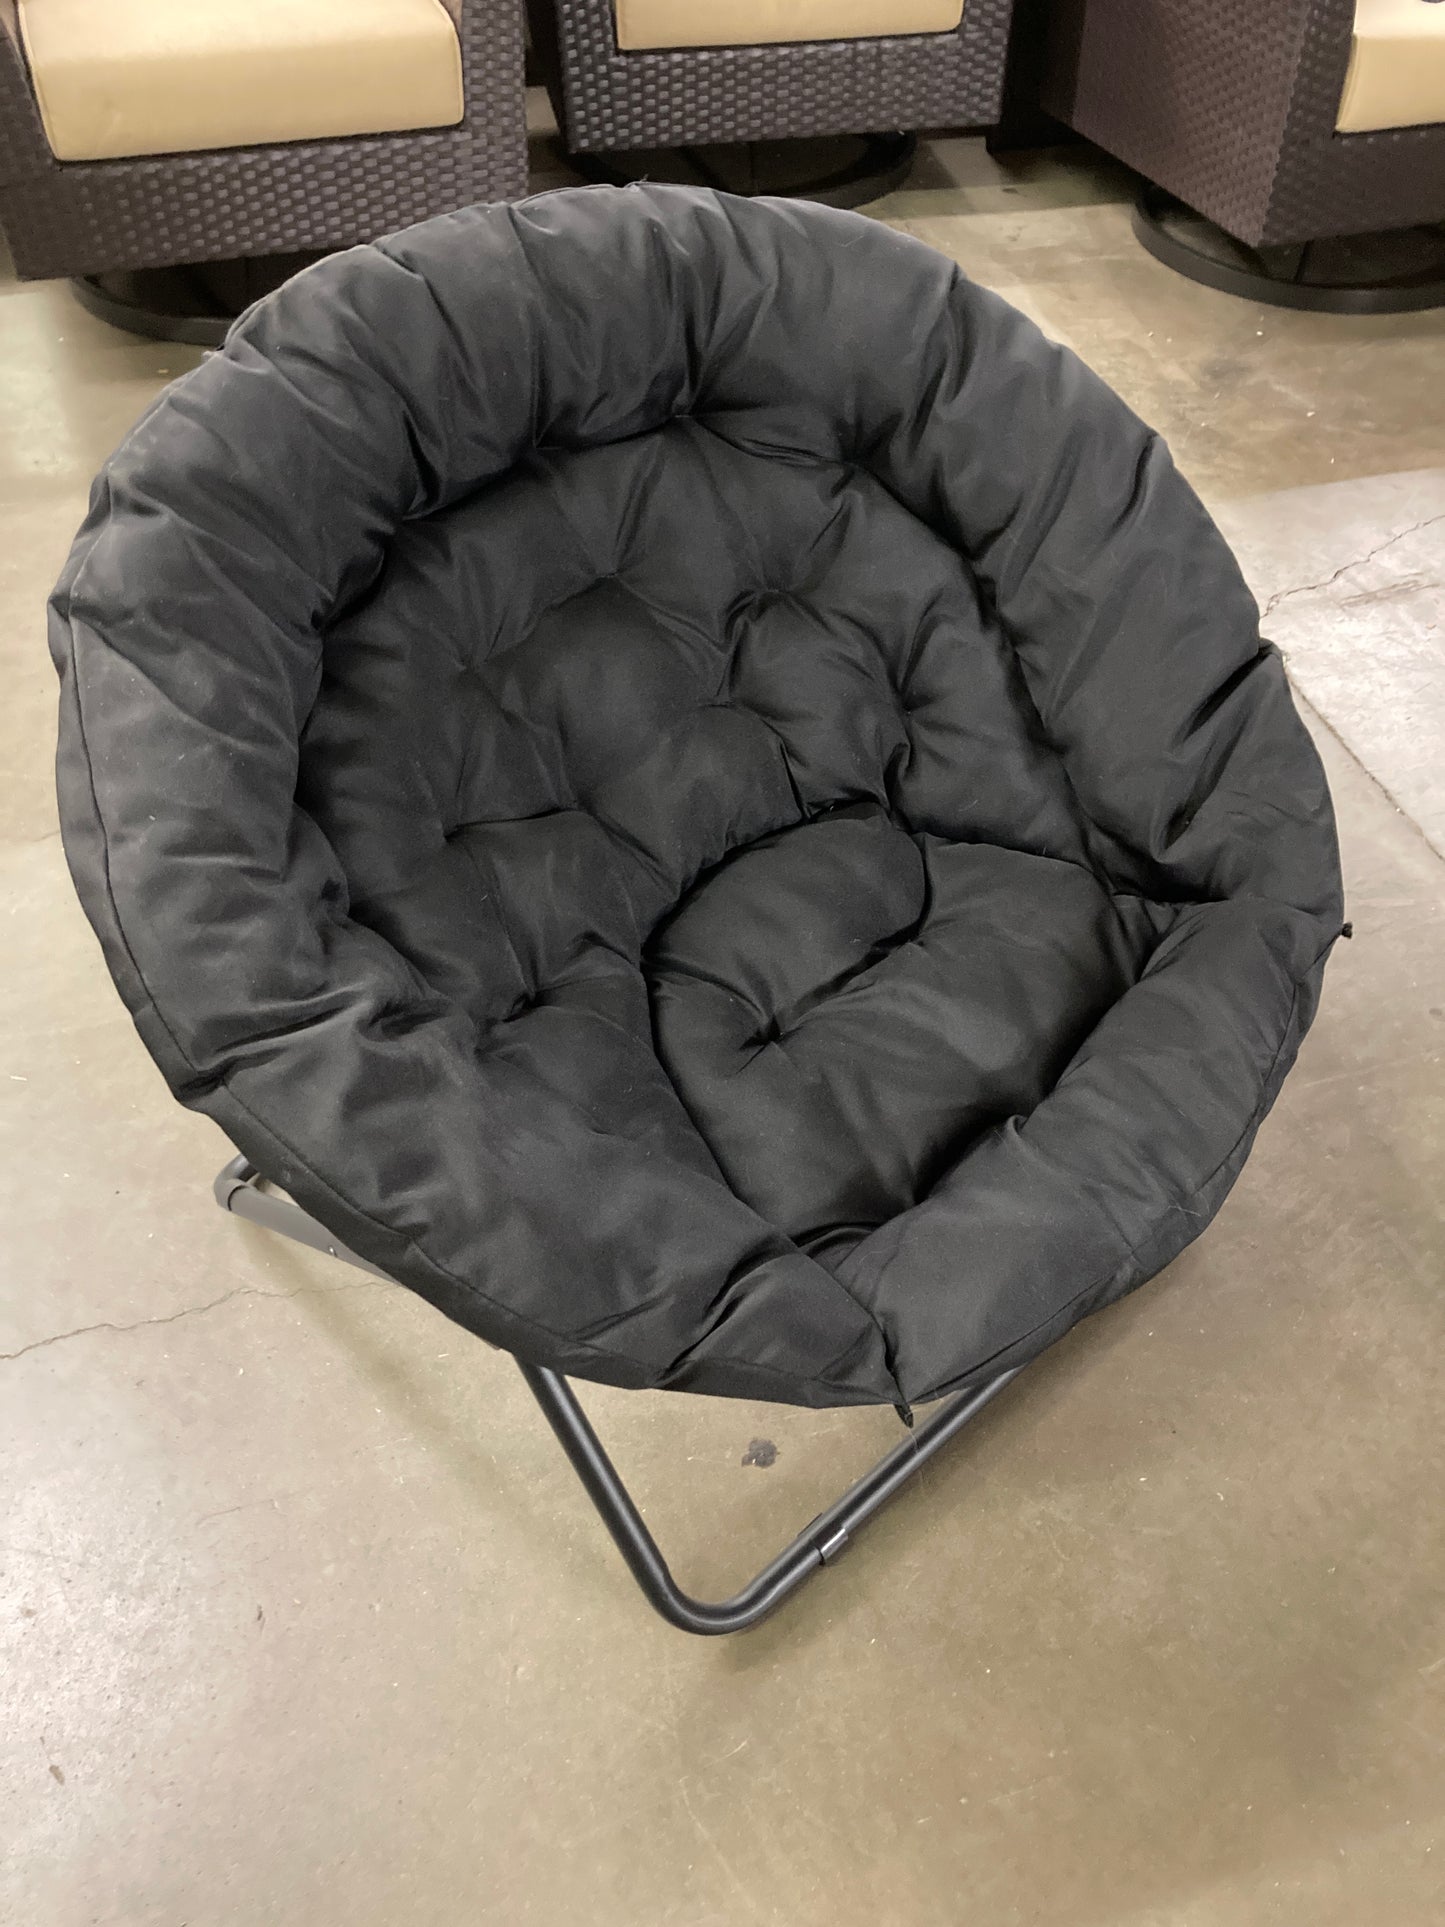 Costco - Idea Nuova Oversized Saucer Chair - Retail $39